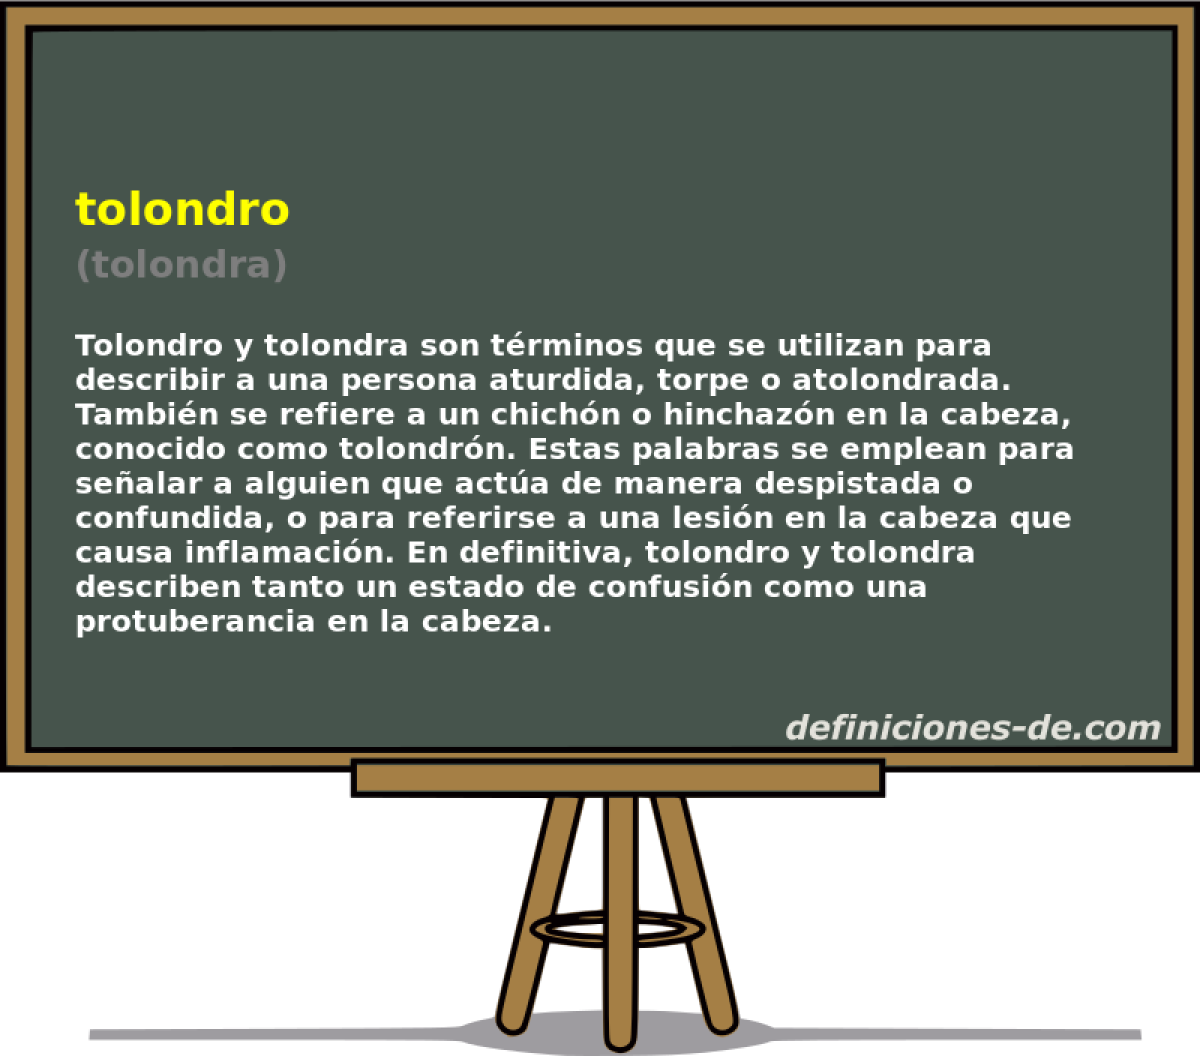 tolondro (tolondra)